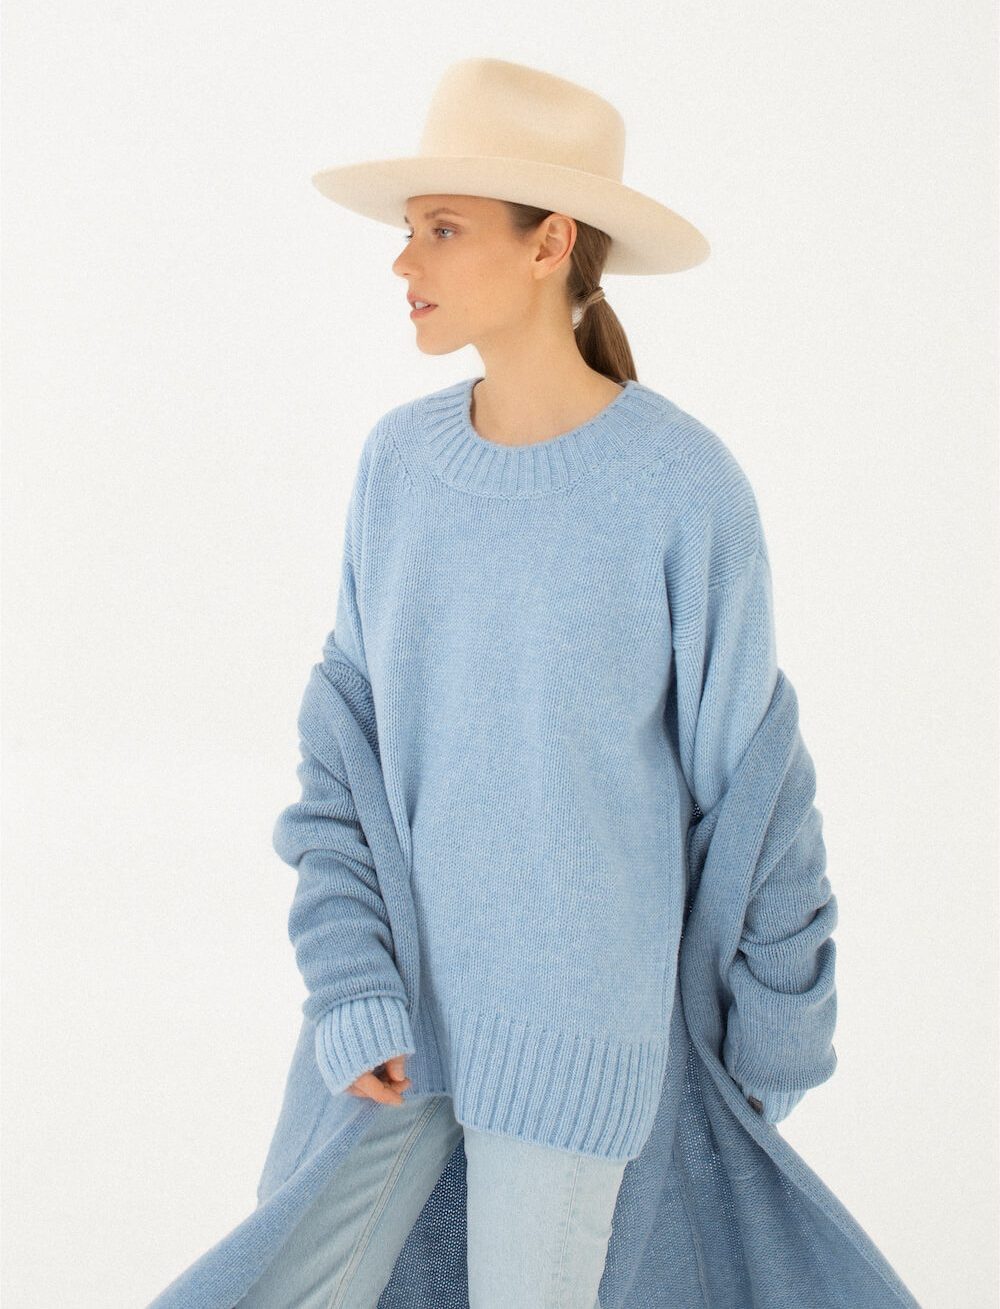 fine-wool-knitted-sweater-jumper5